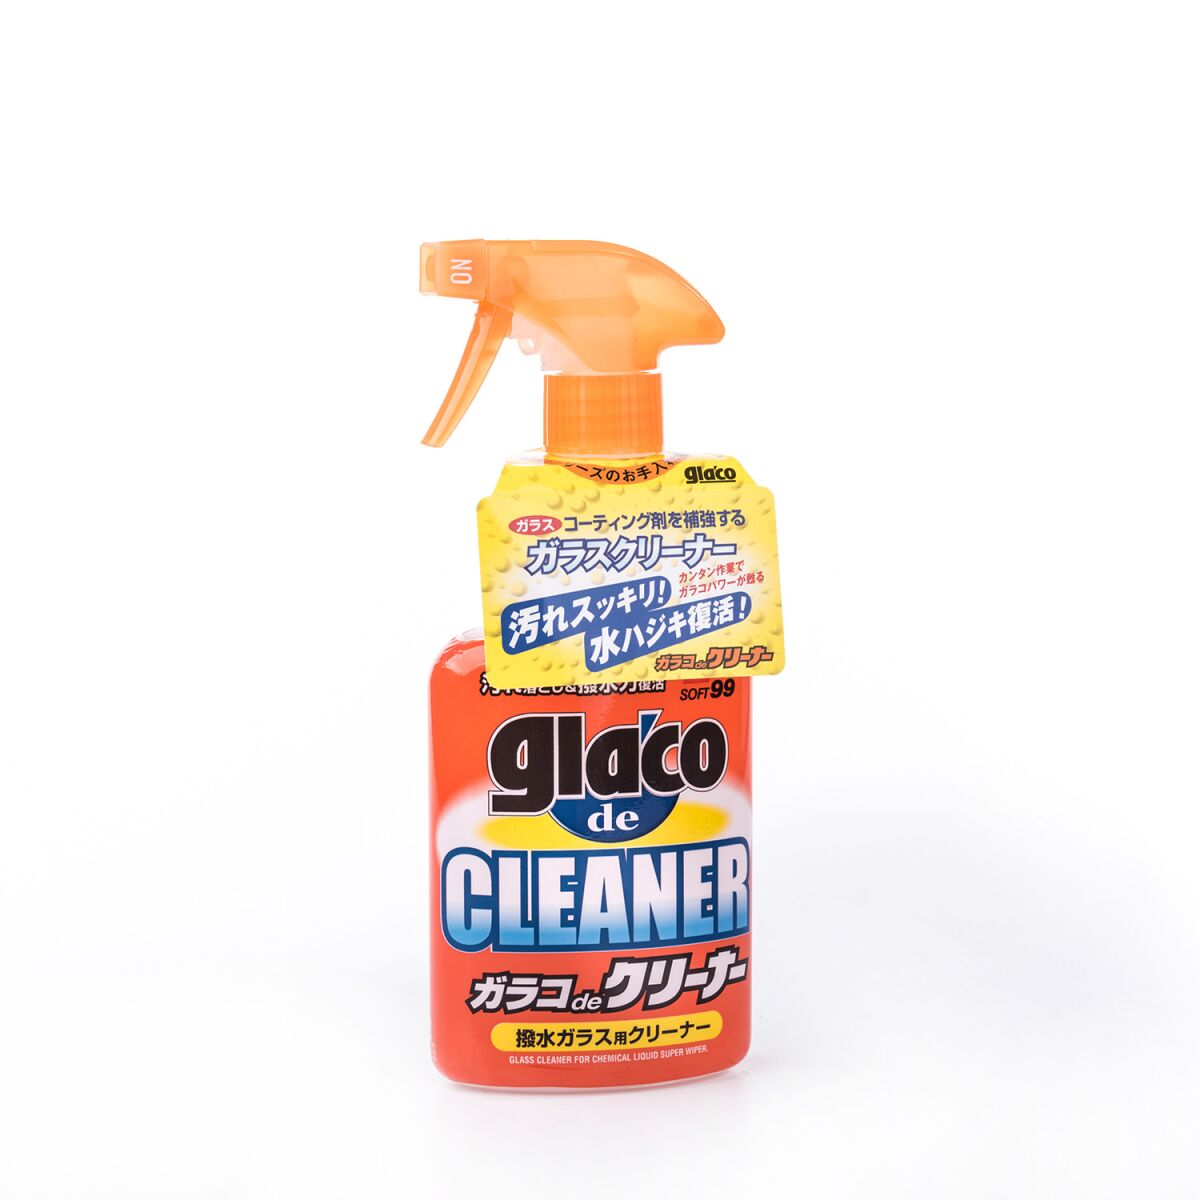 Soft99 Glaco De Cleaner Glasreiniger